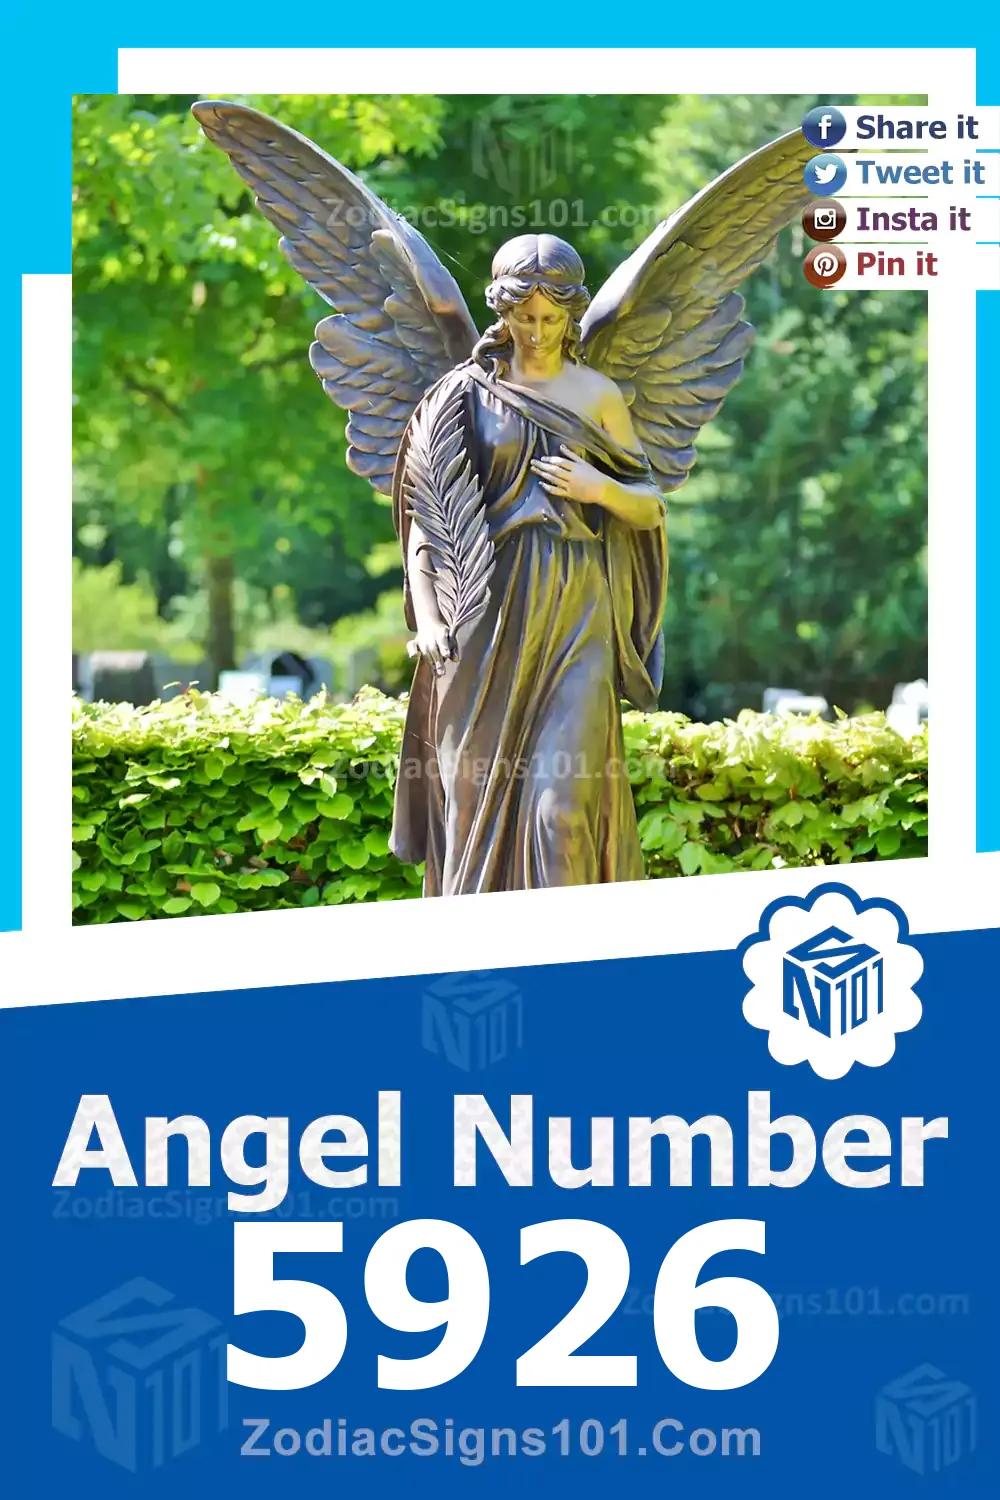 5926-Angel-Number-Meaning.jpg